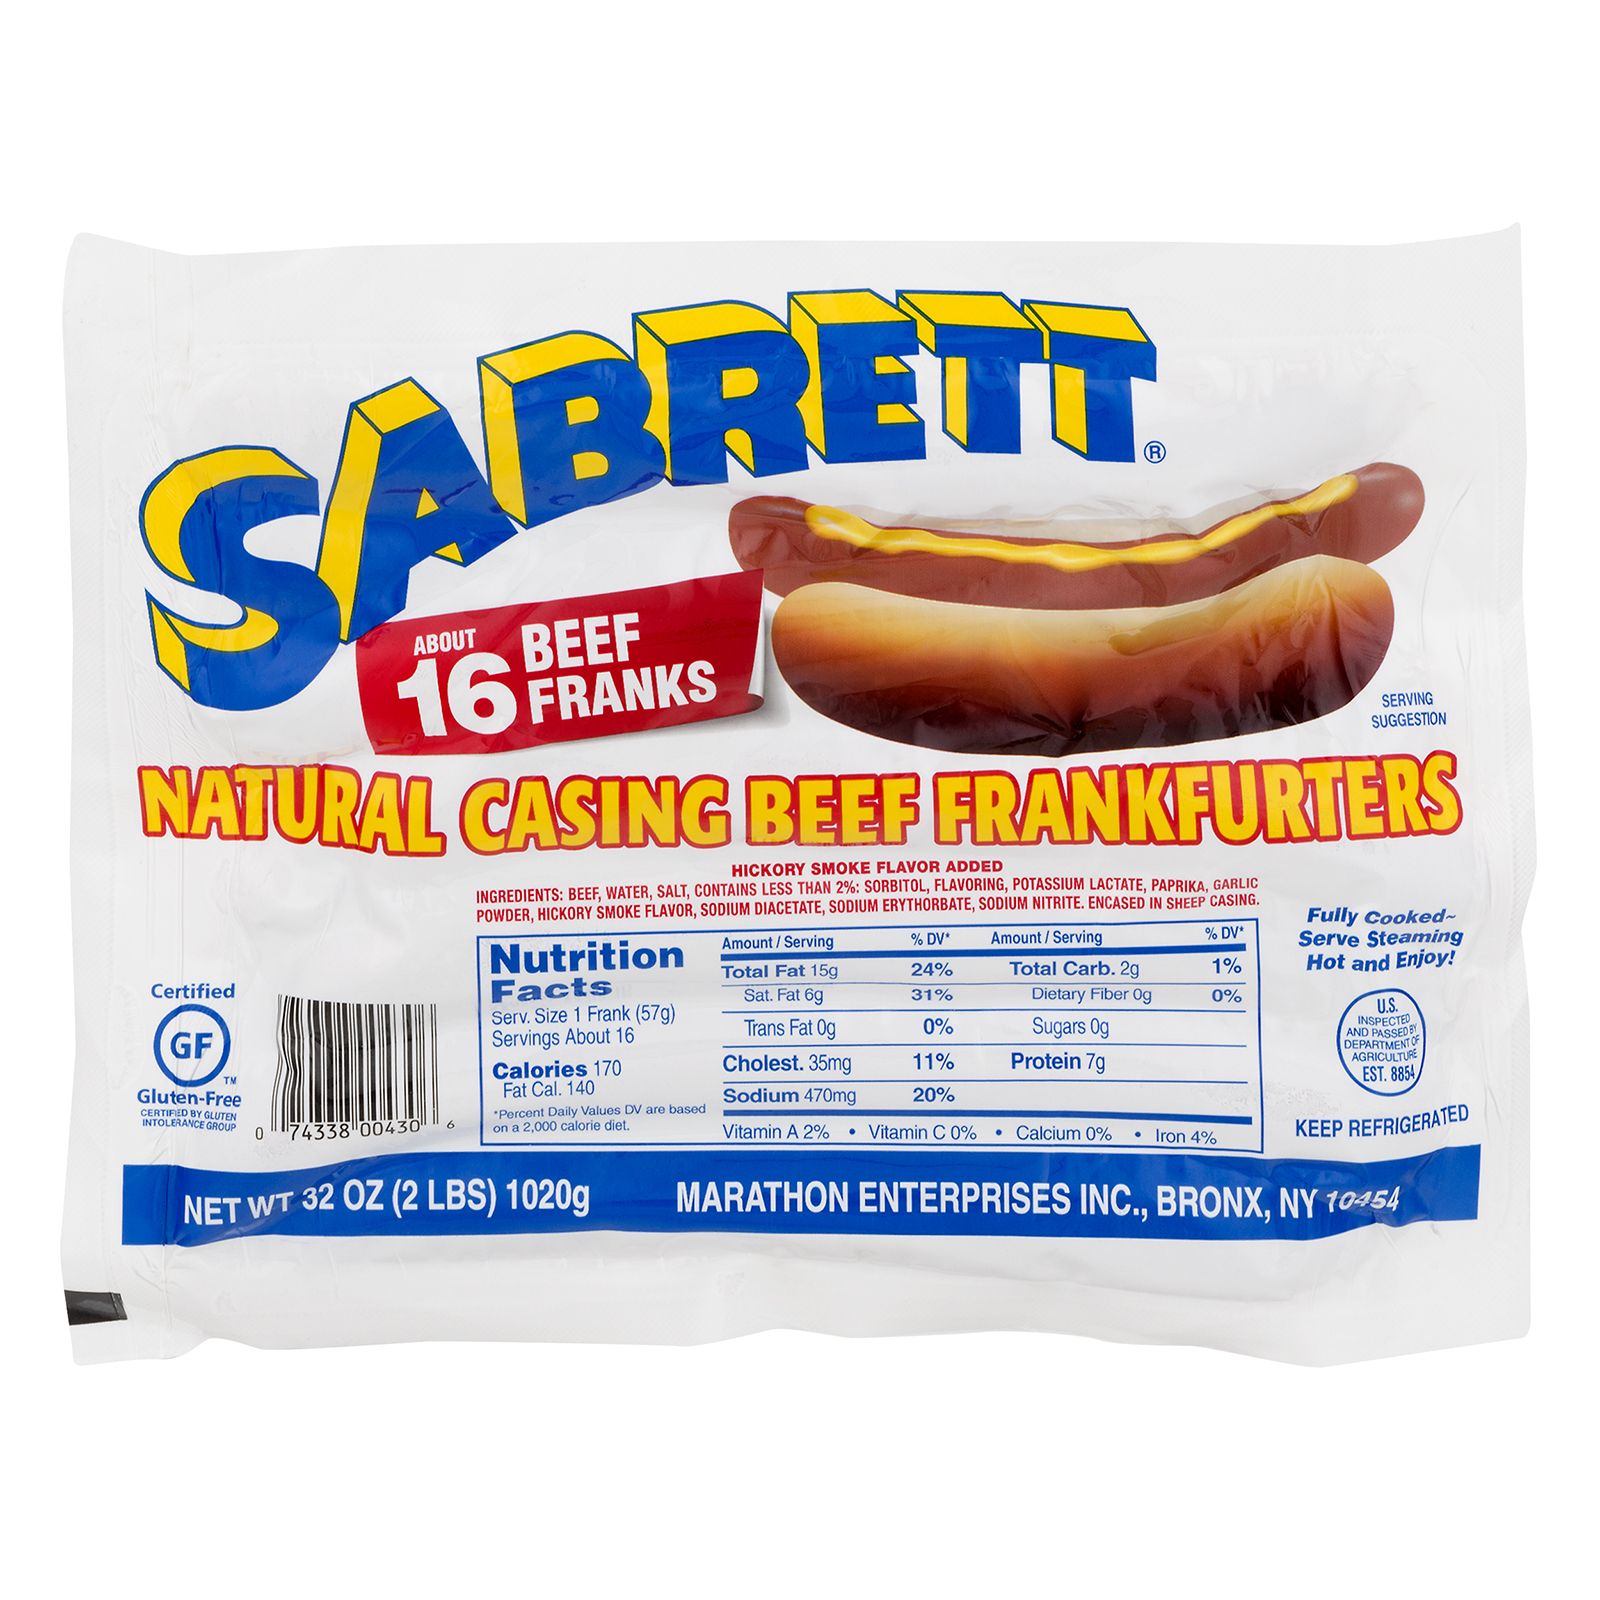 Sabrett Natural-Casing Beef Frankfurters, 16 ct.